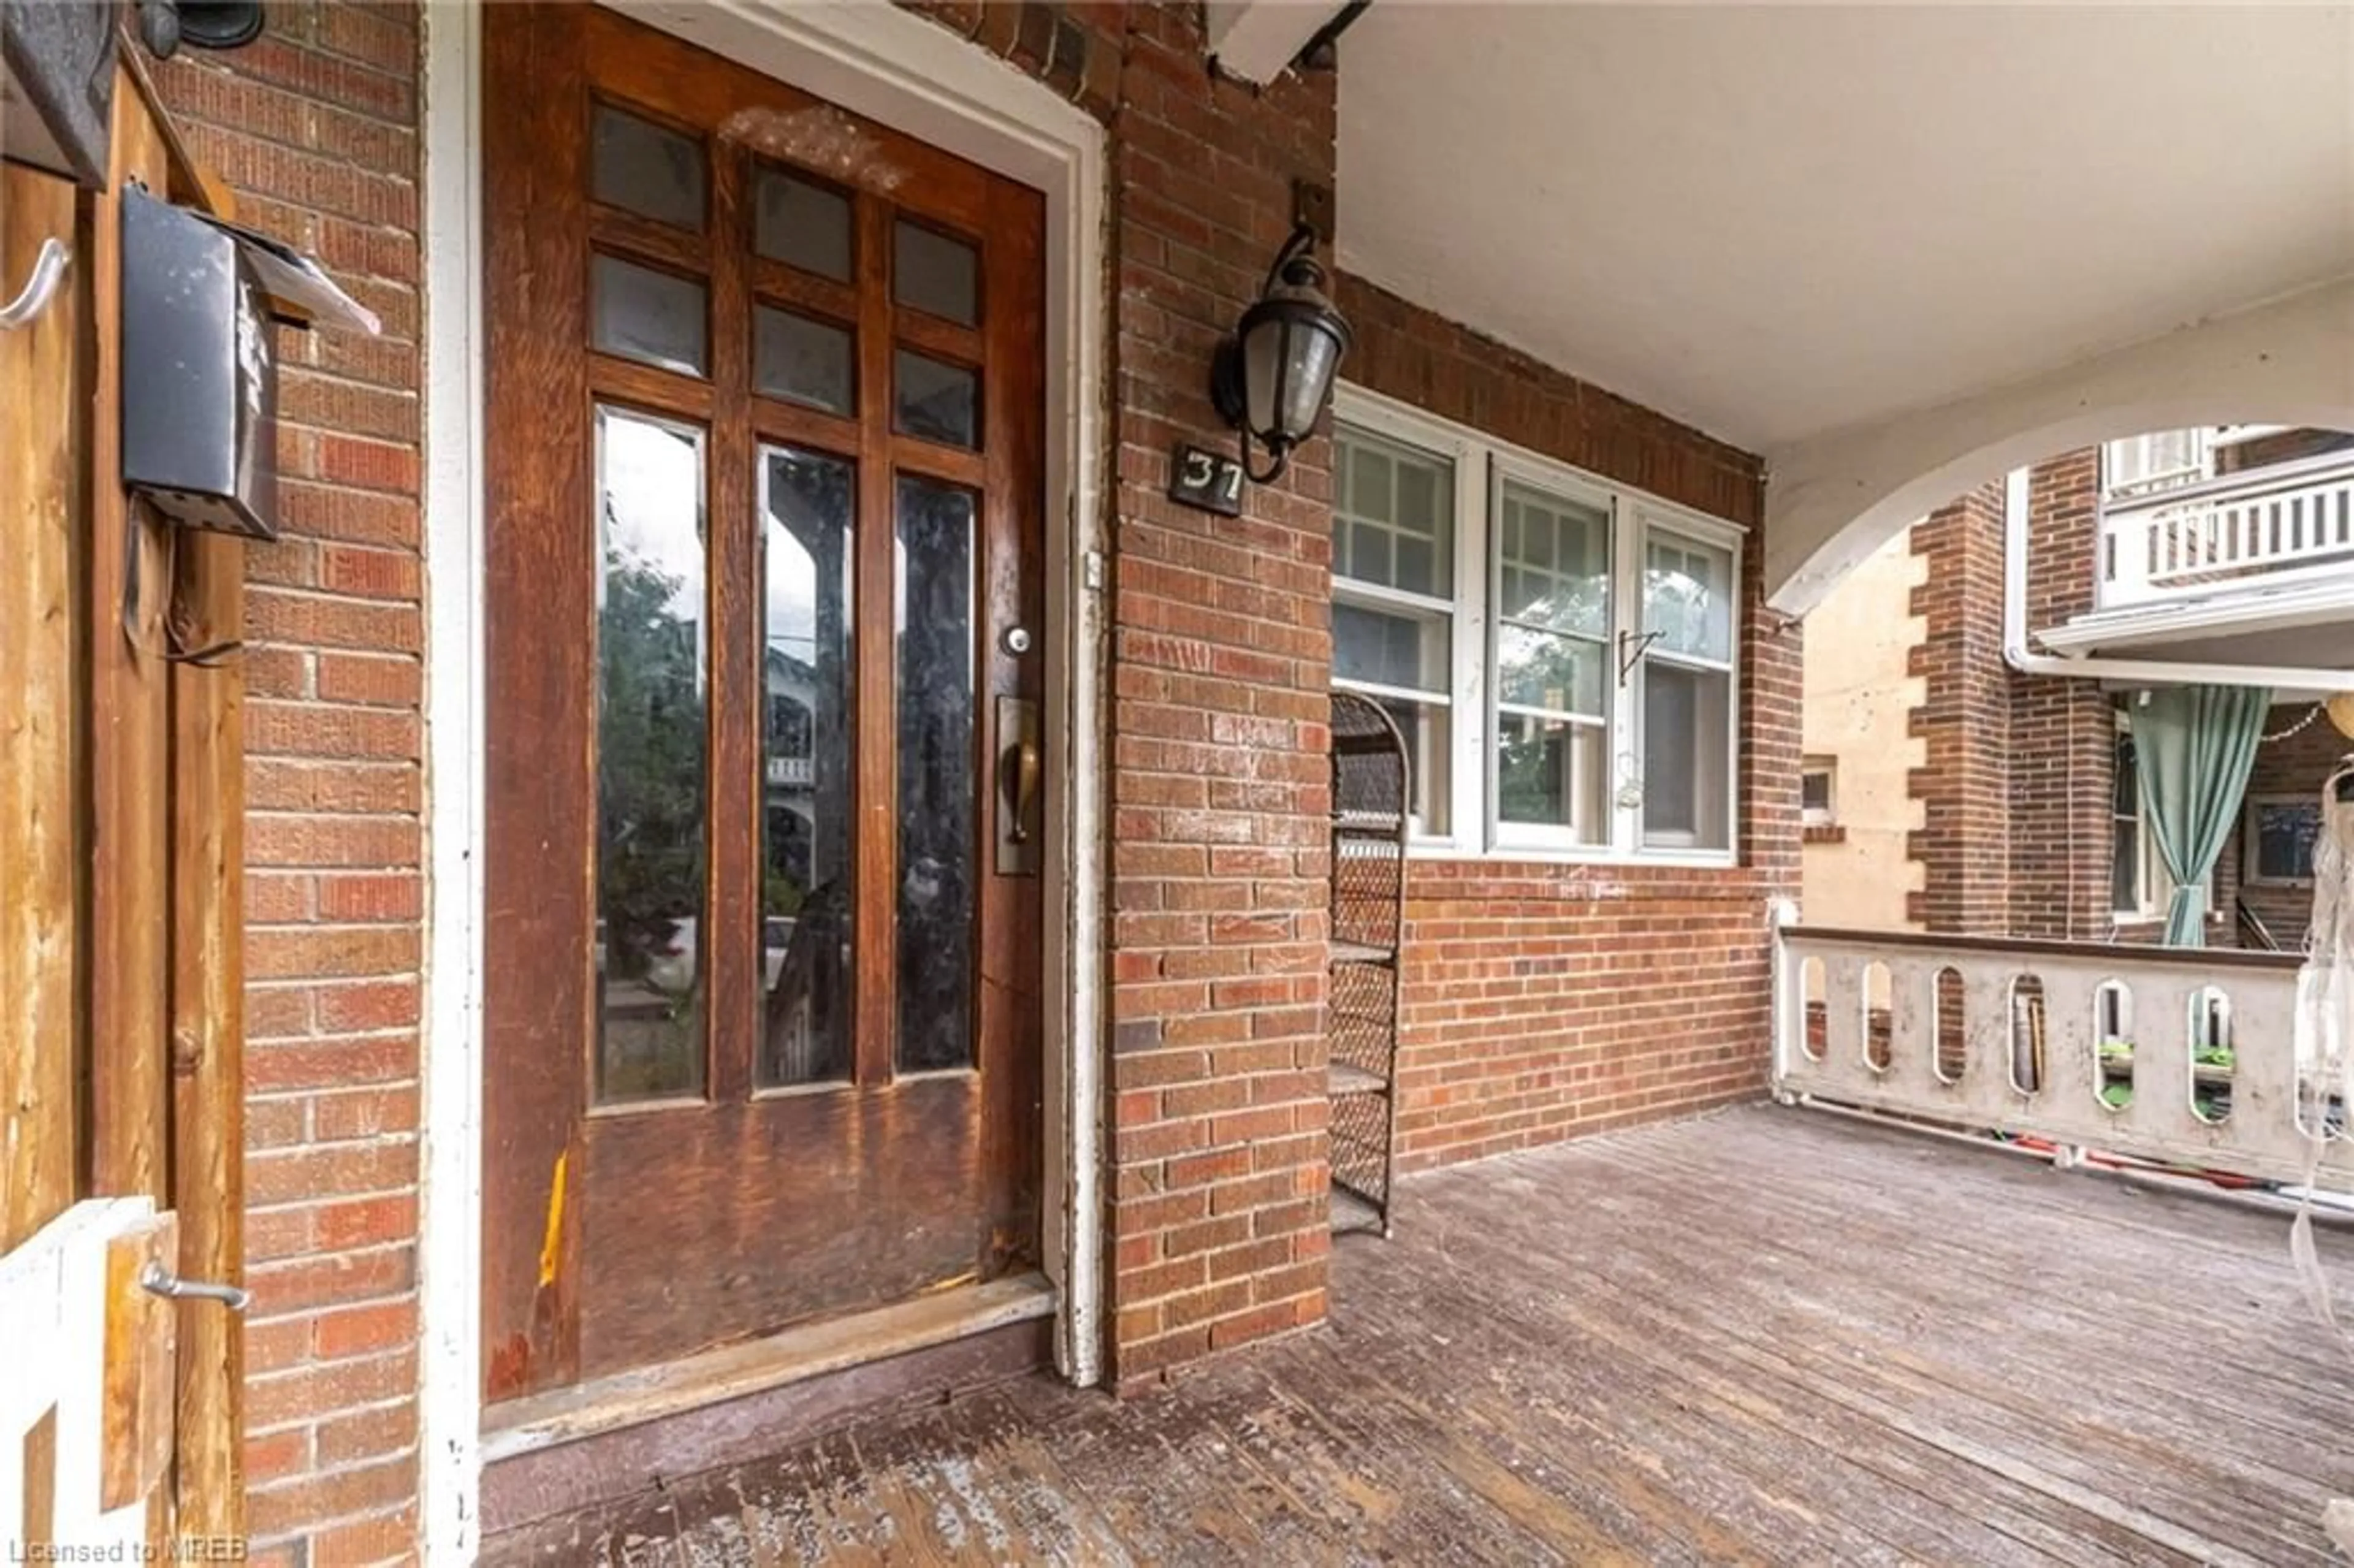 Home with brick exterior material for 37 Wineva Ave, Toronto Ontario M4E 2T1